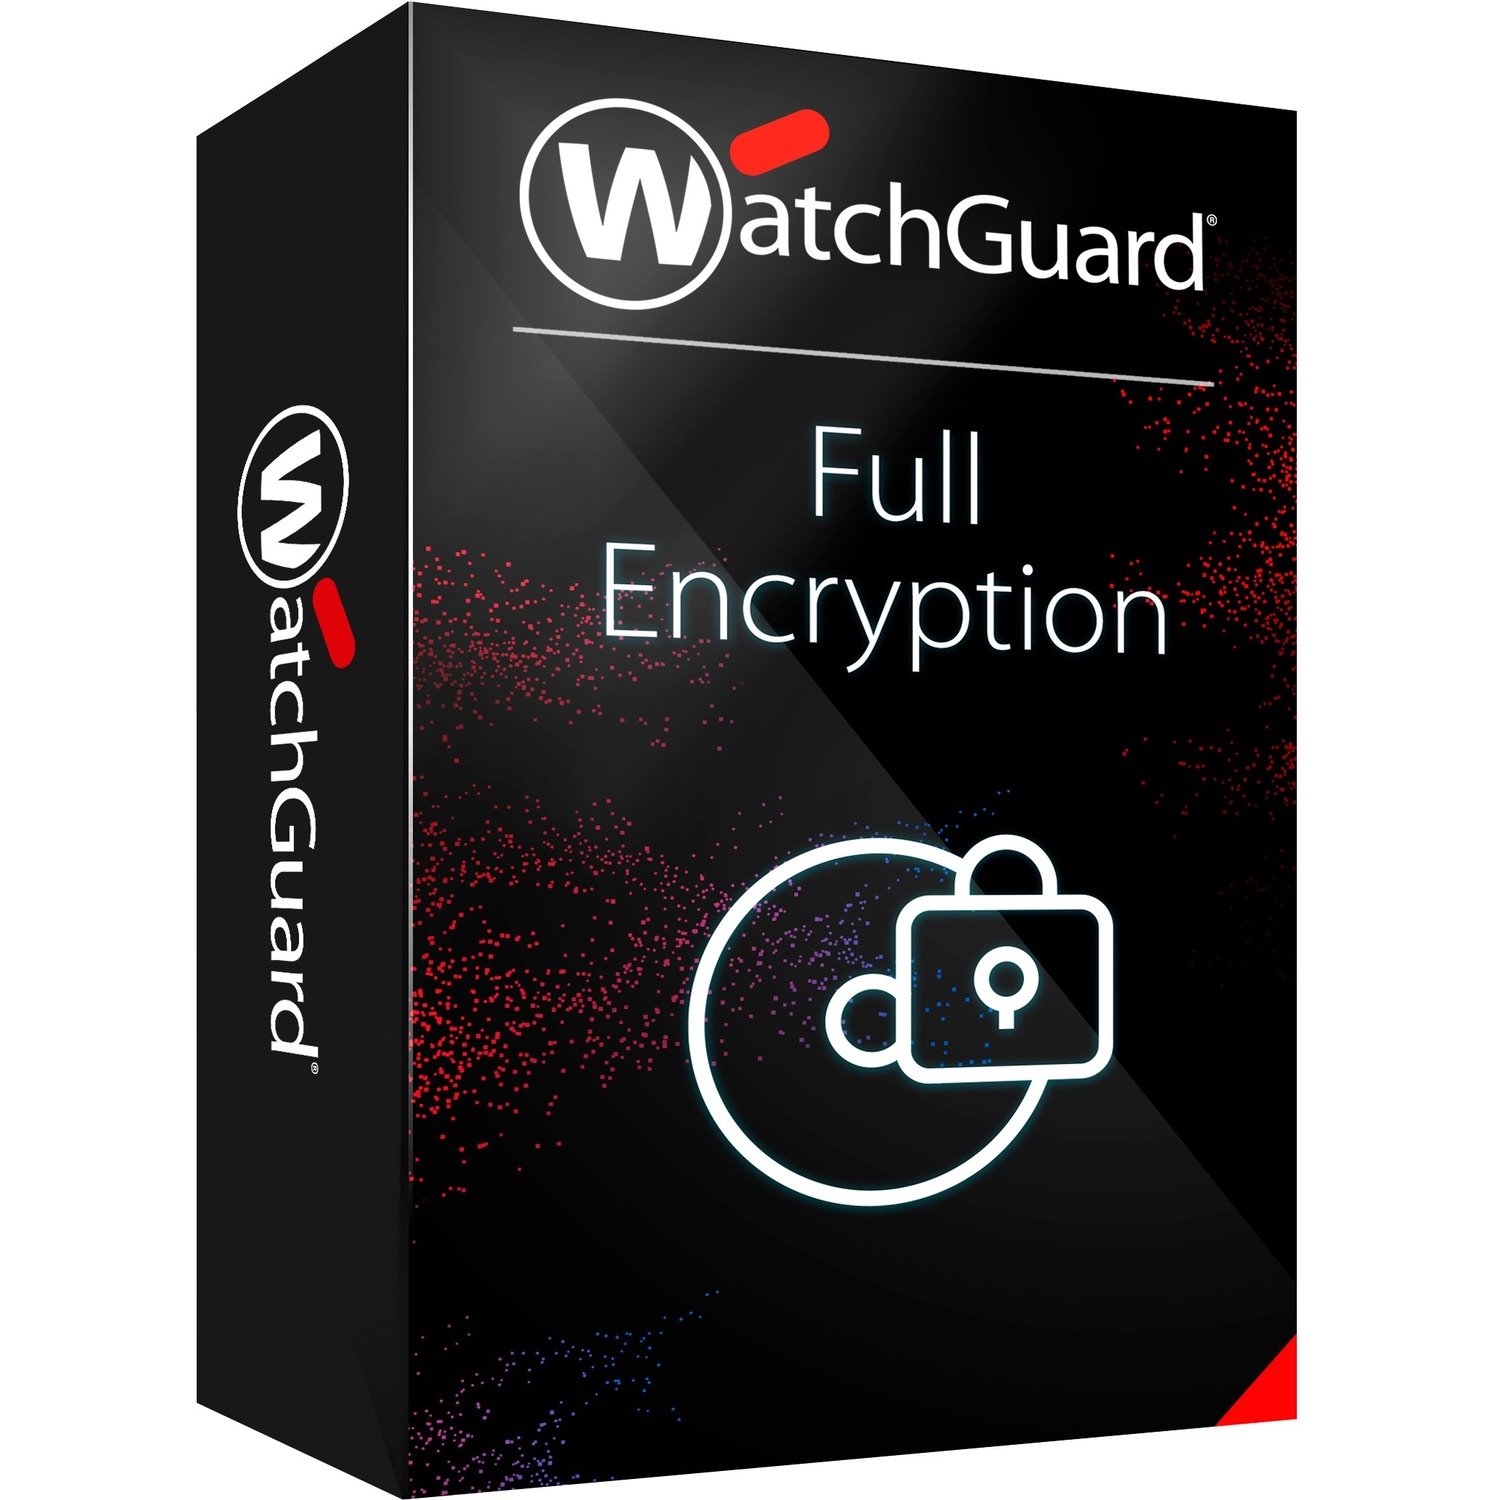 WatchGuard Full Encryption - 3 Year